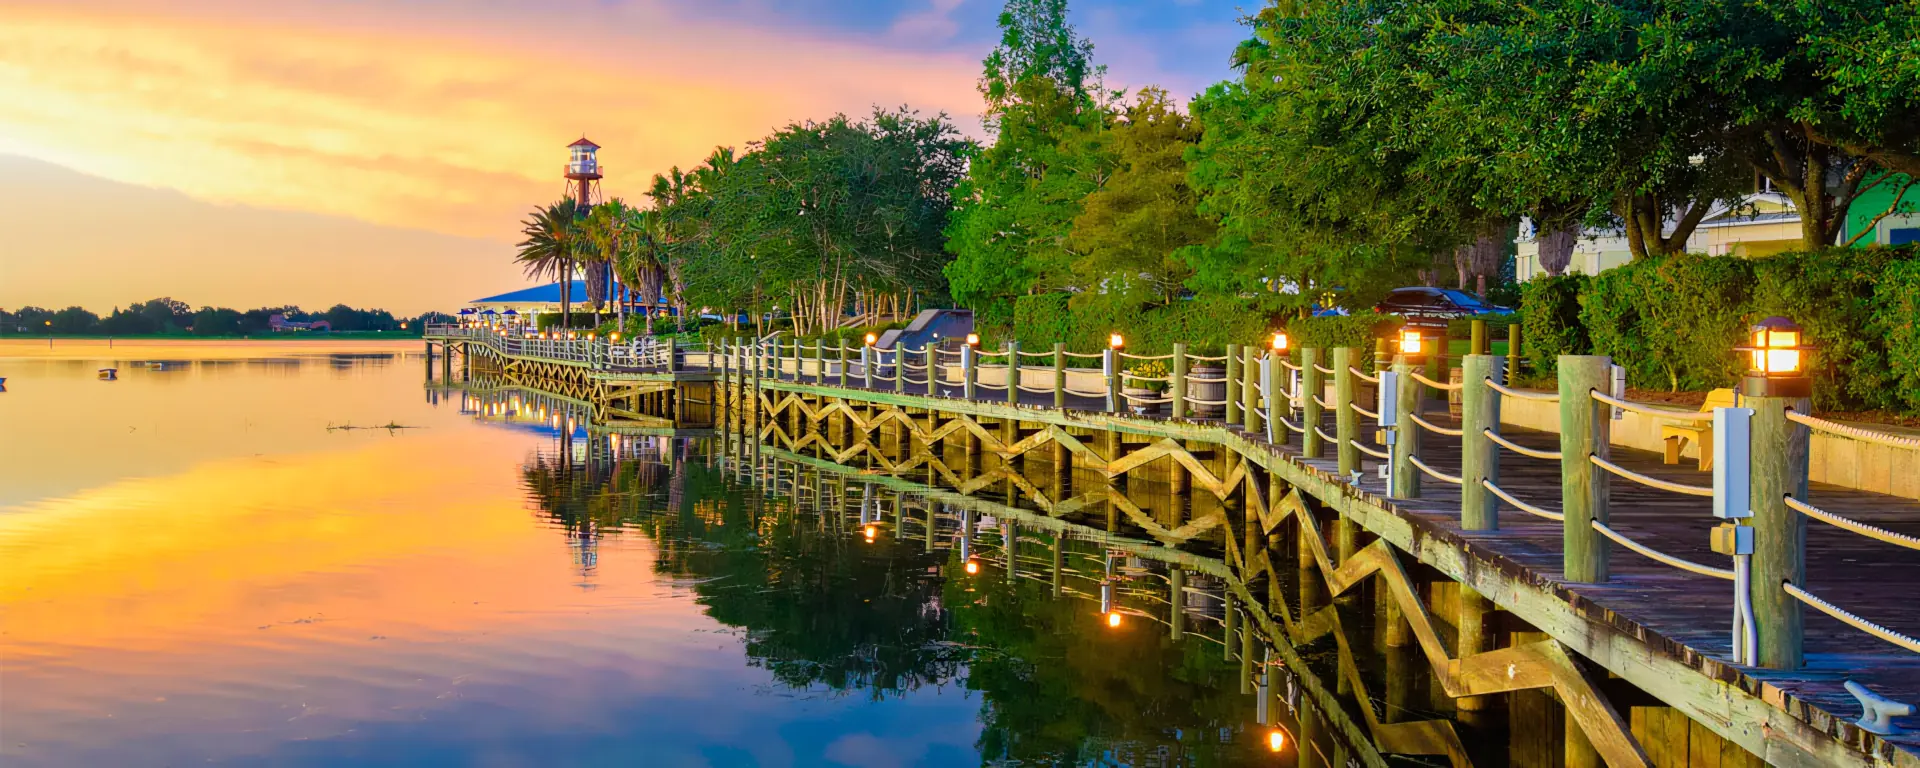 Audubon Park | Turning Point of Tampa